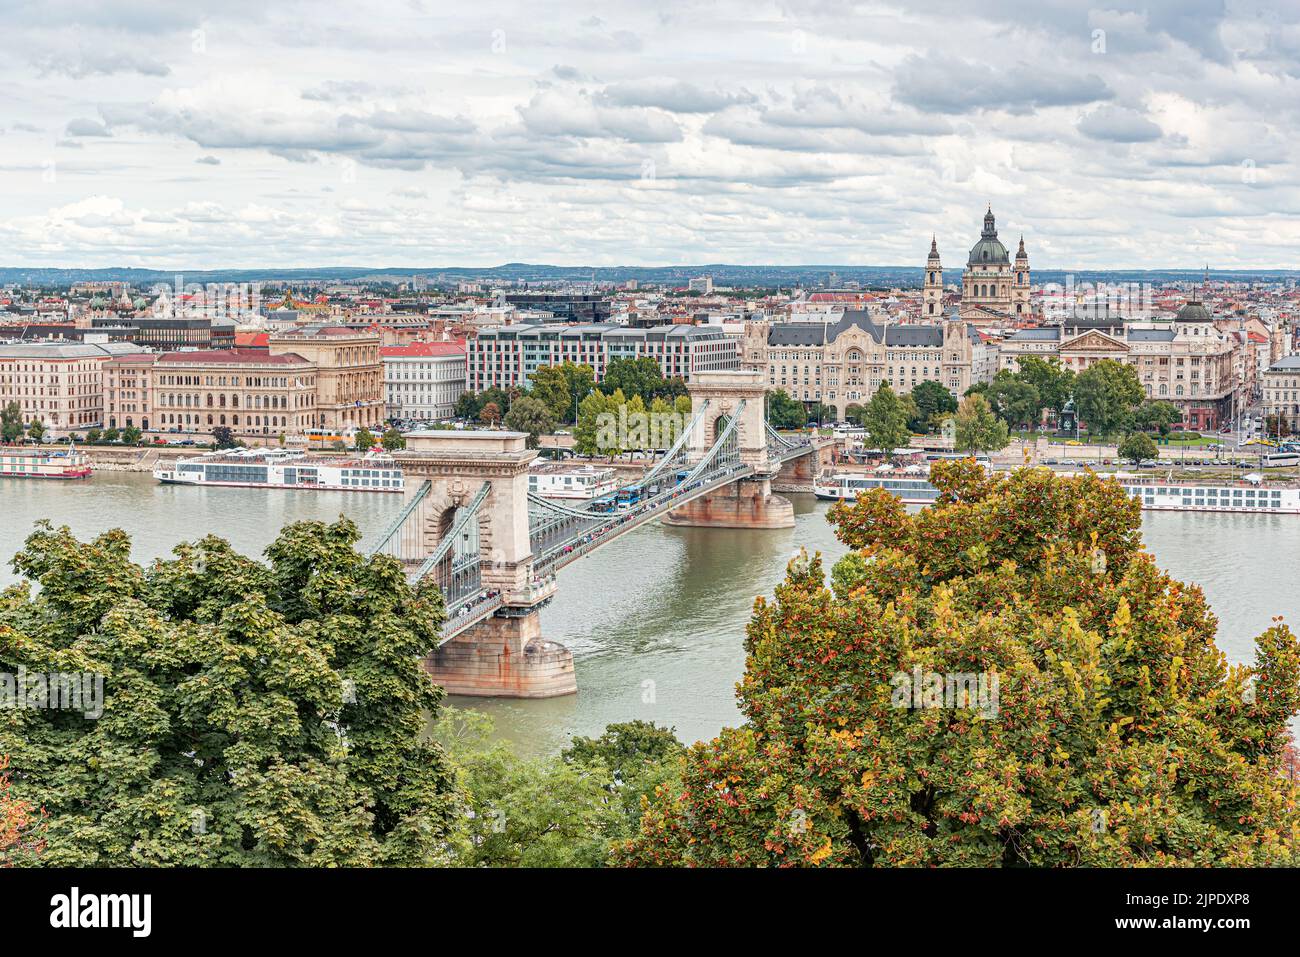 The Chain Bridge Szechenyi Lanchid in Budapest. Budapest Hungary Stock Photo